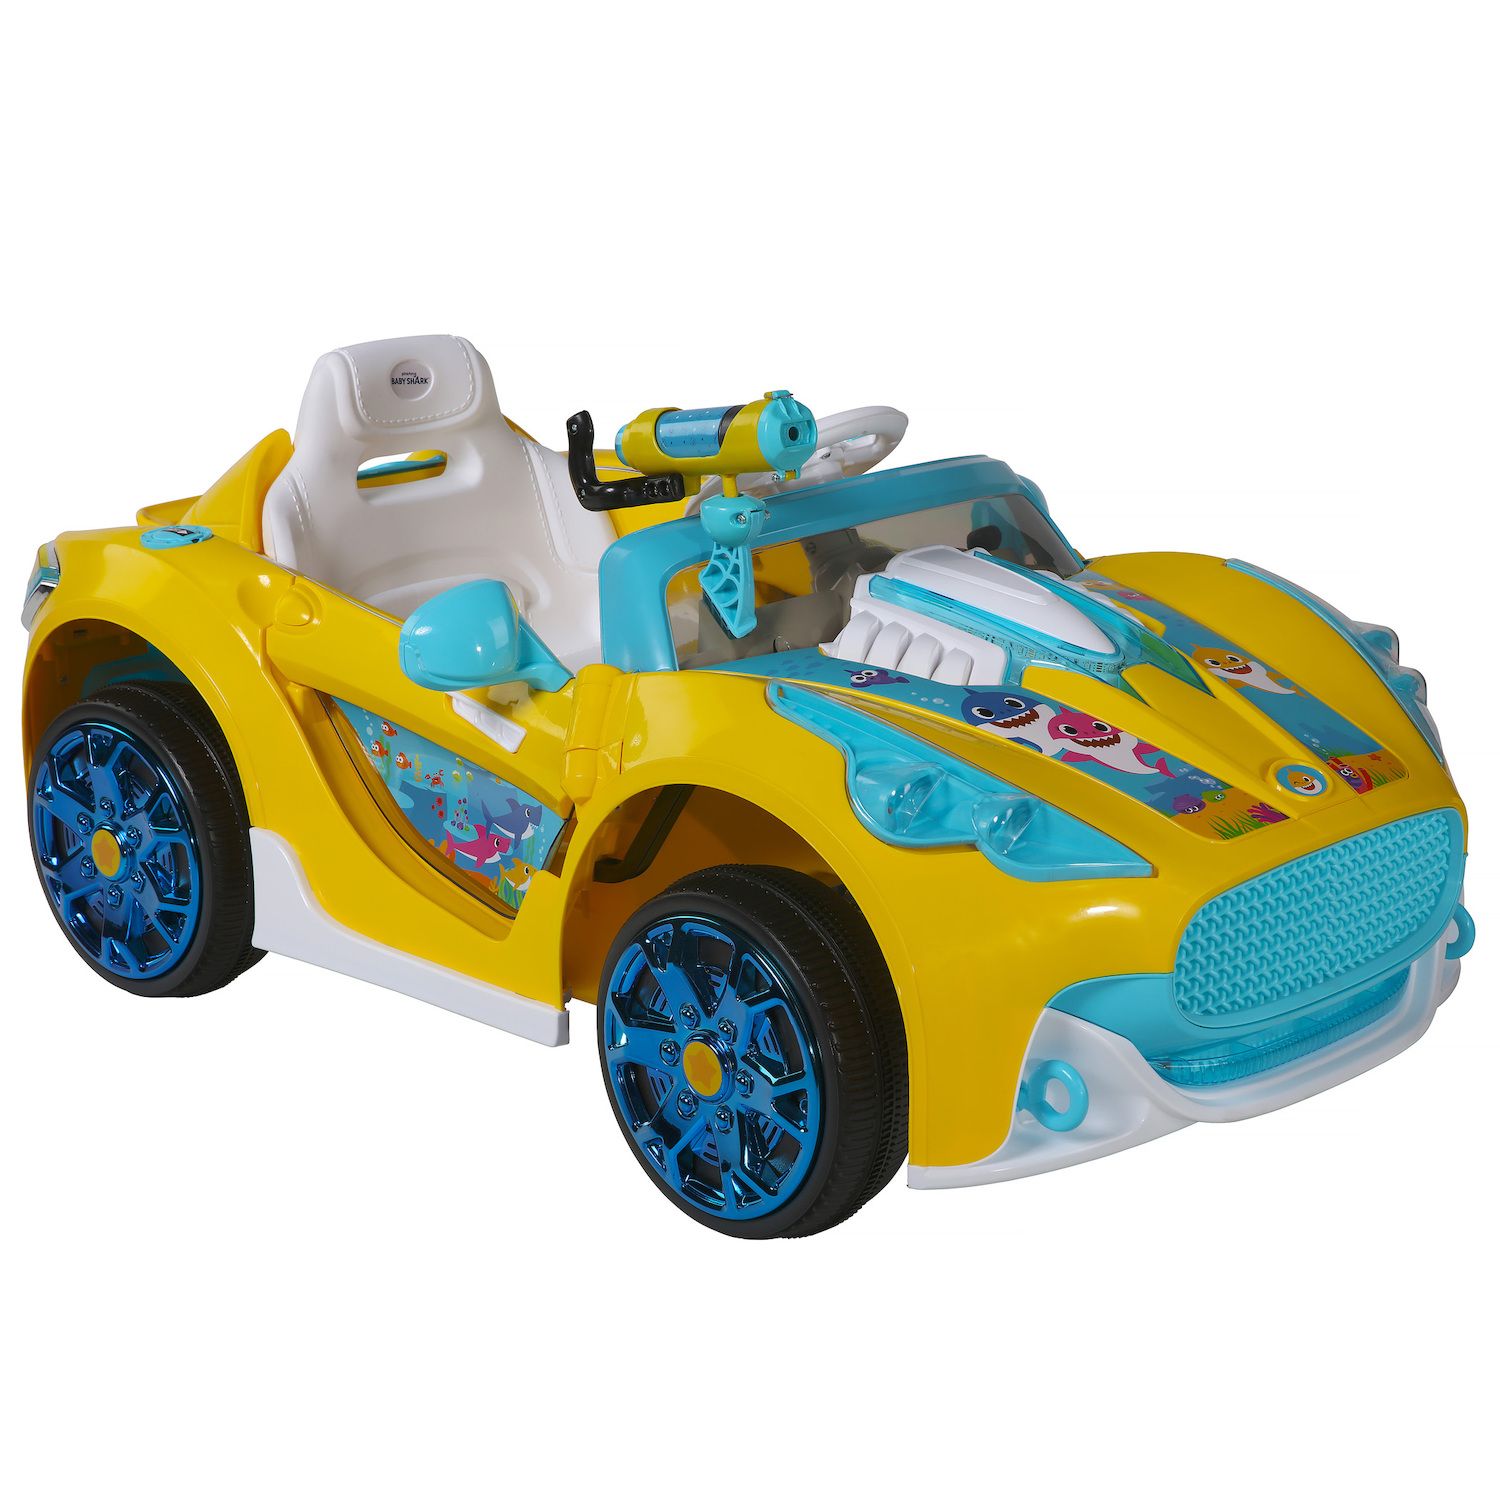 Image for Dynacraft Baby Shark 6-Volt Super Car Ride-On at Kohl's.